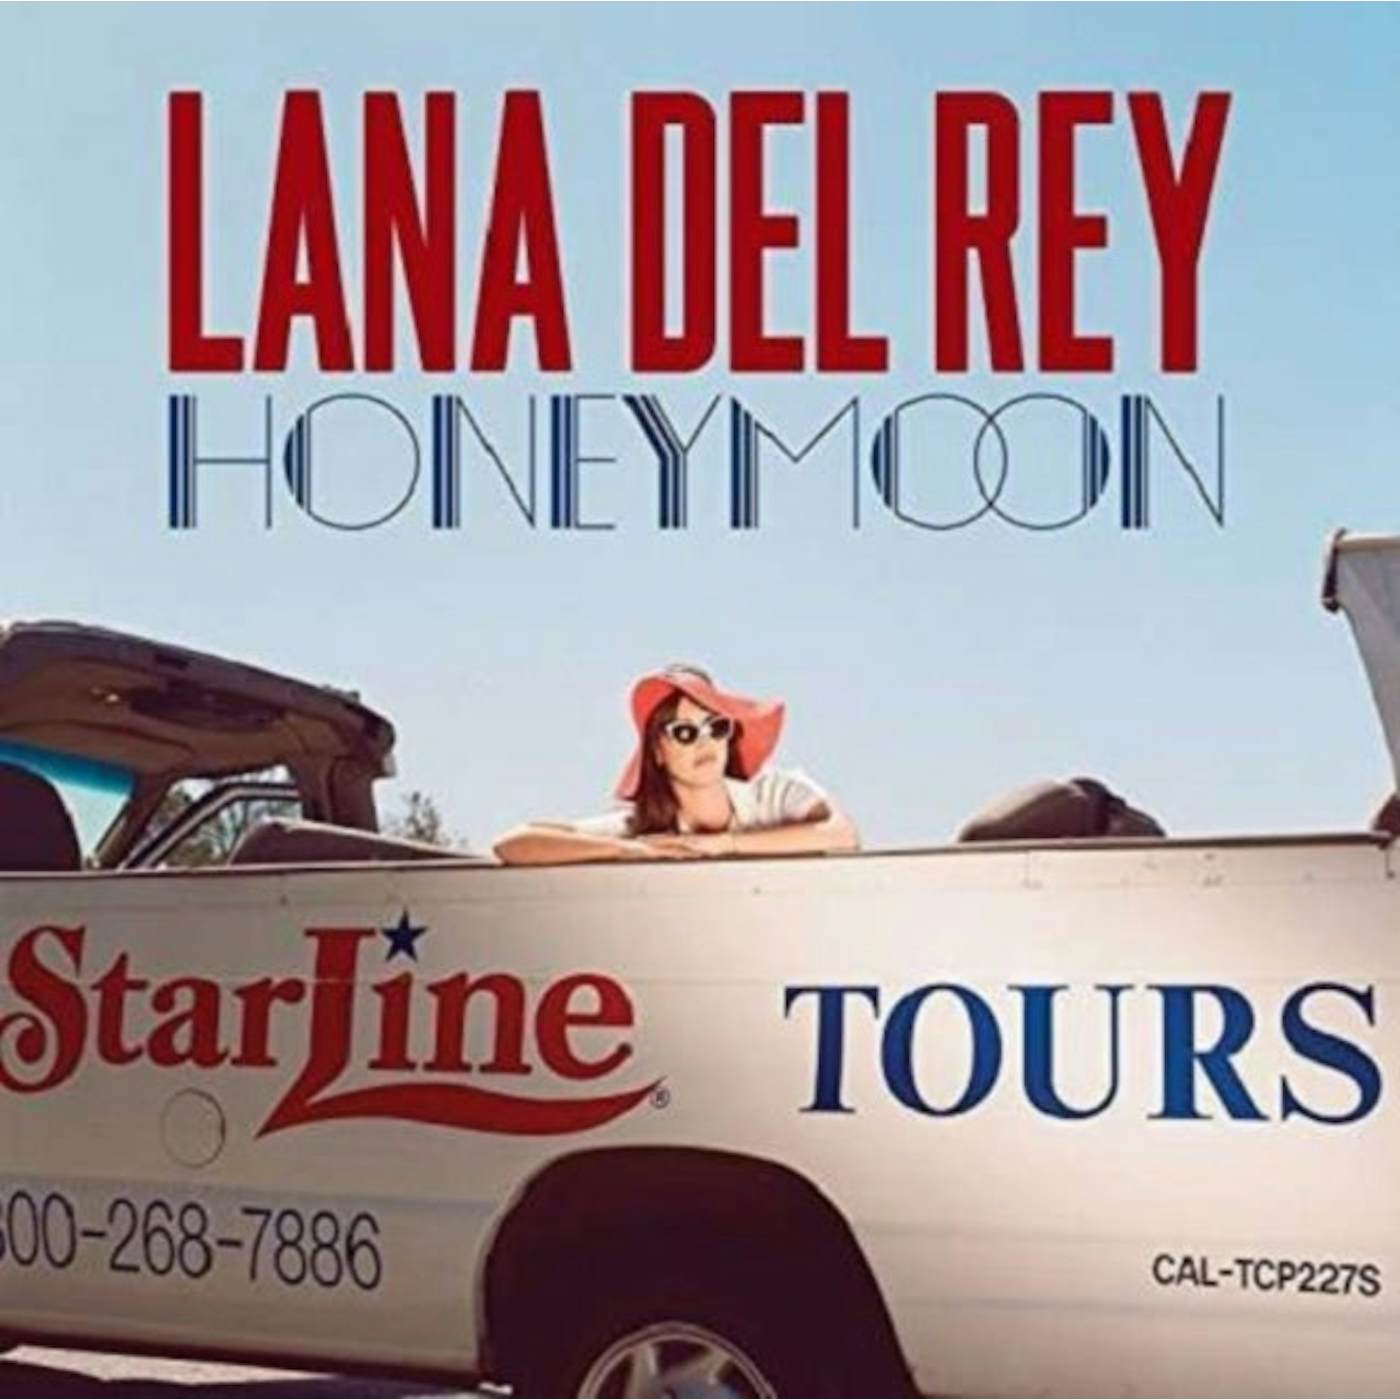 Lana Del Rey LP Vinyl Record - Honeymoon